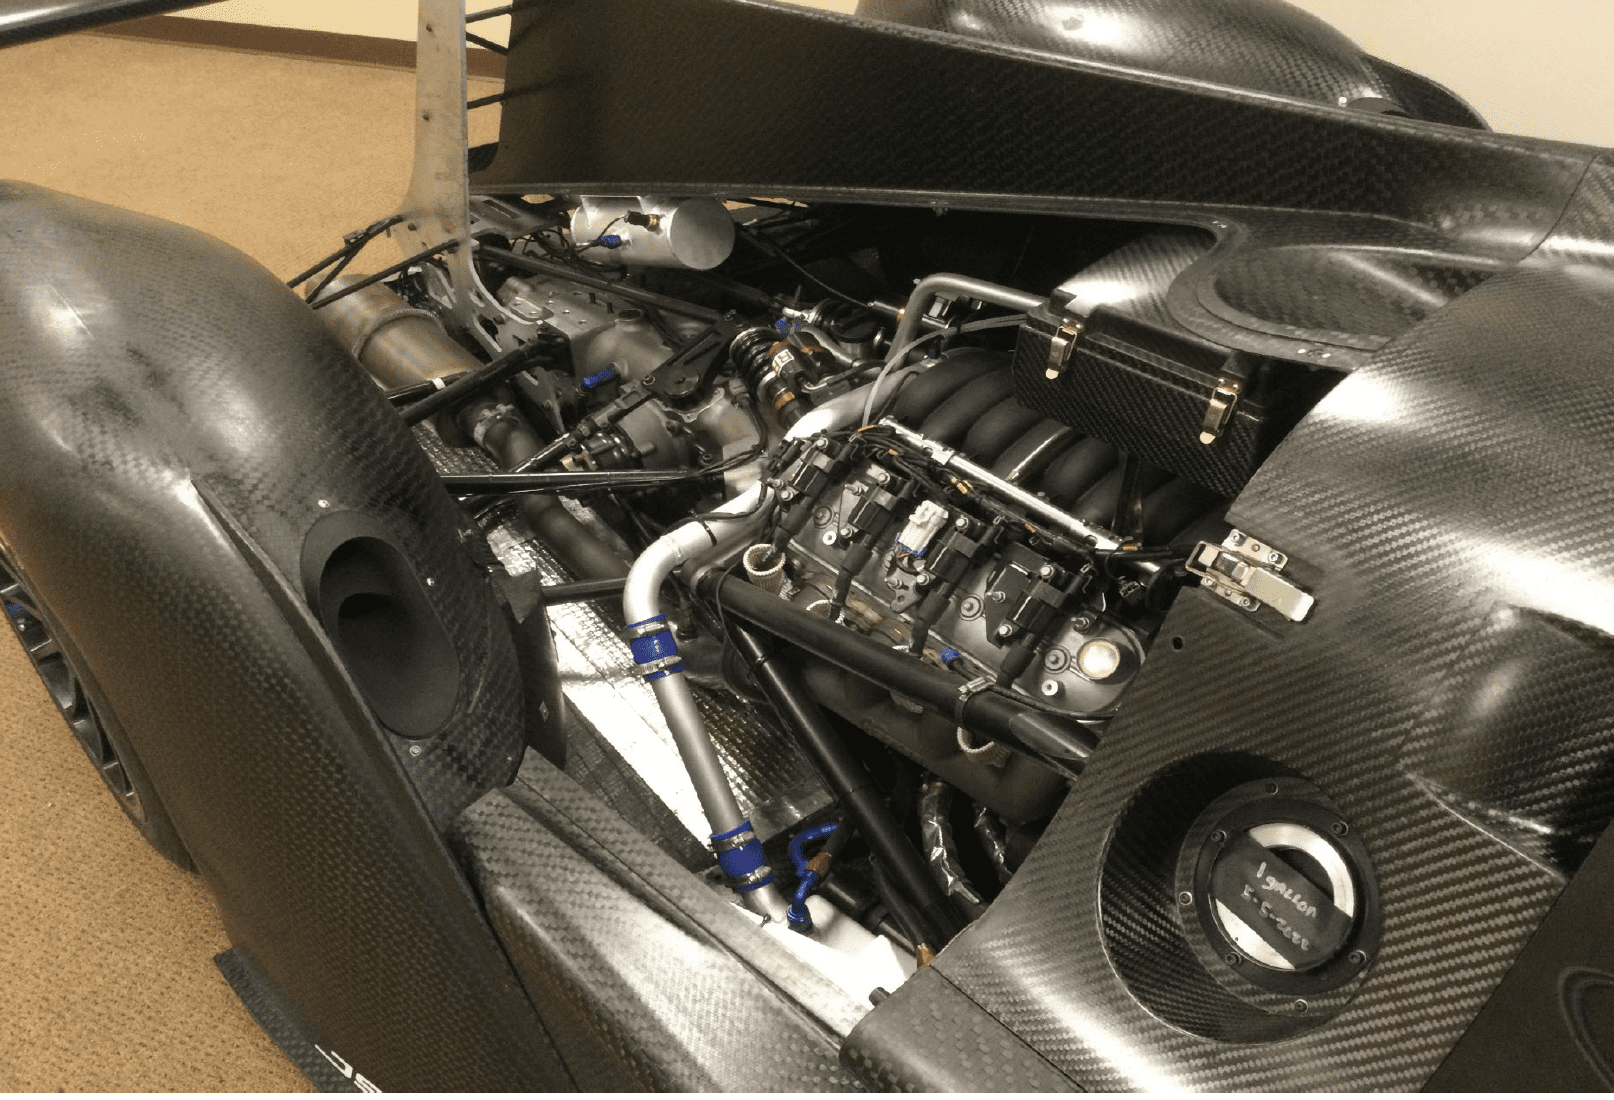 2019 Porsche GT3 - Ligier LMP4-V8 - Used - Sebring, FL 33100, United States